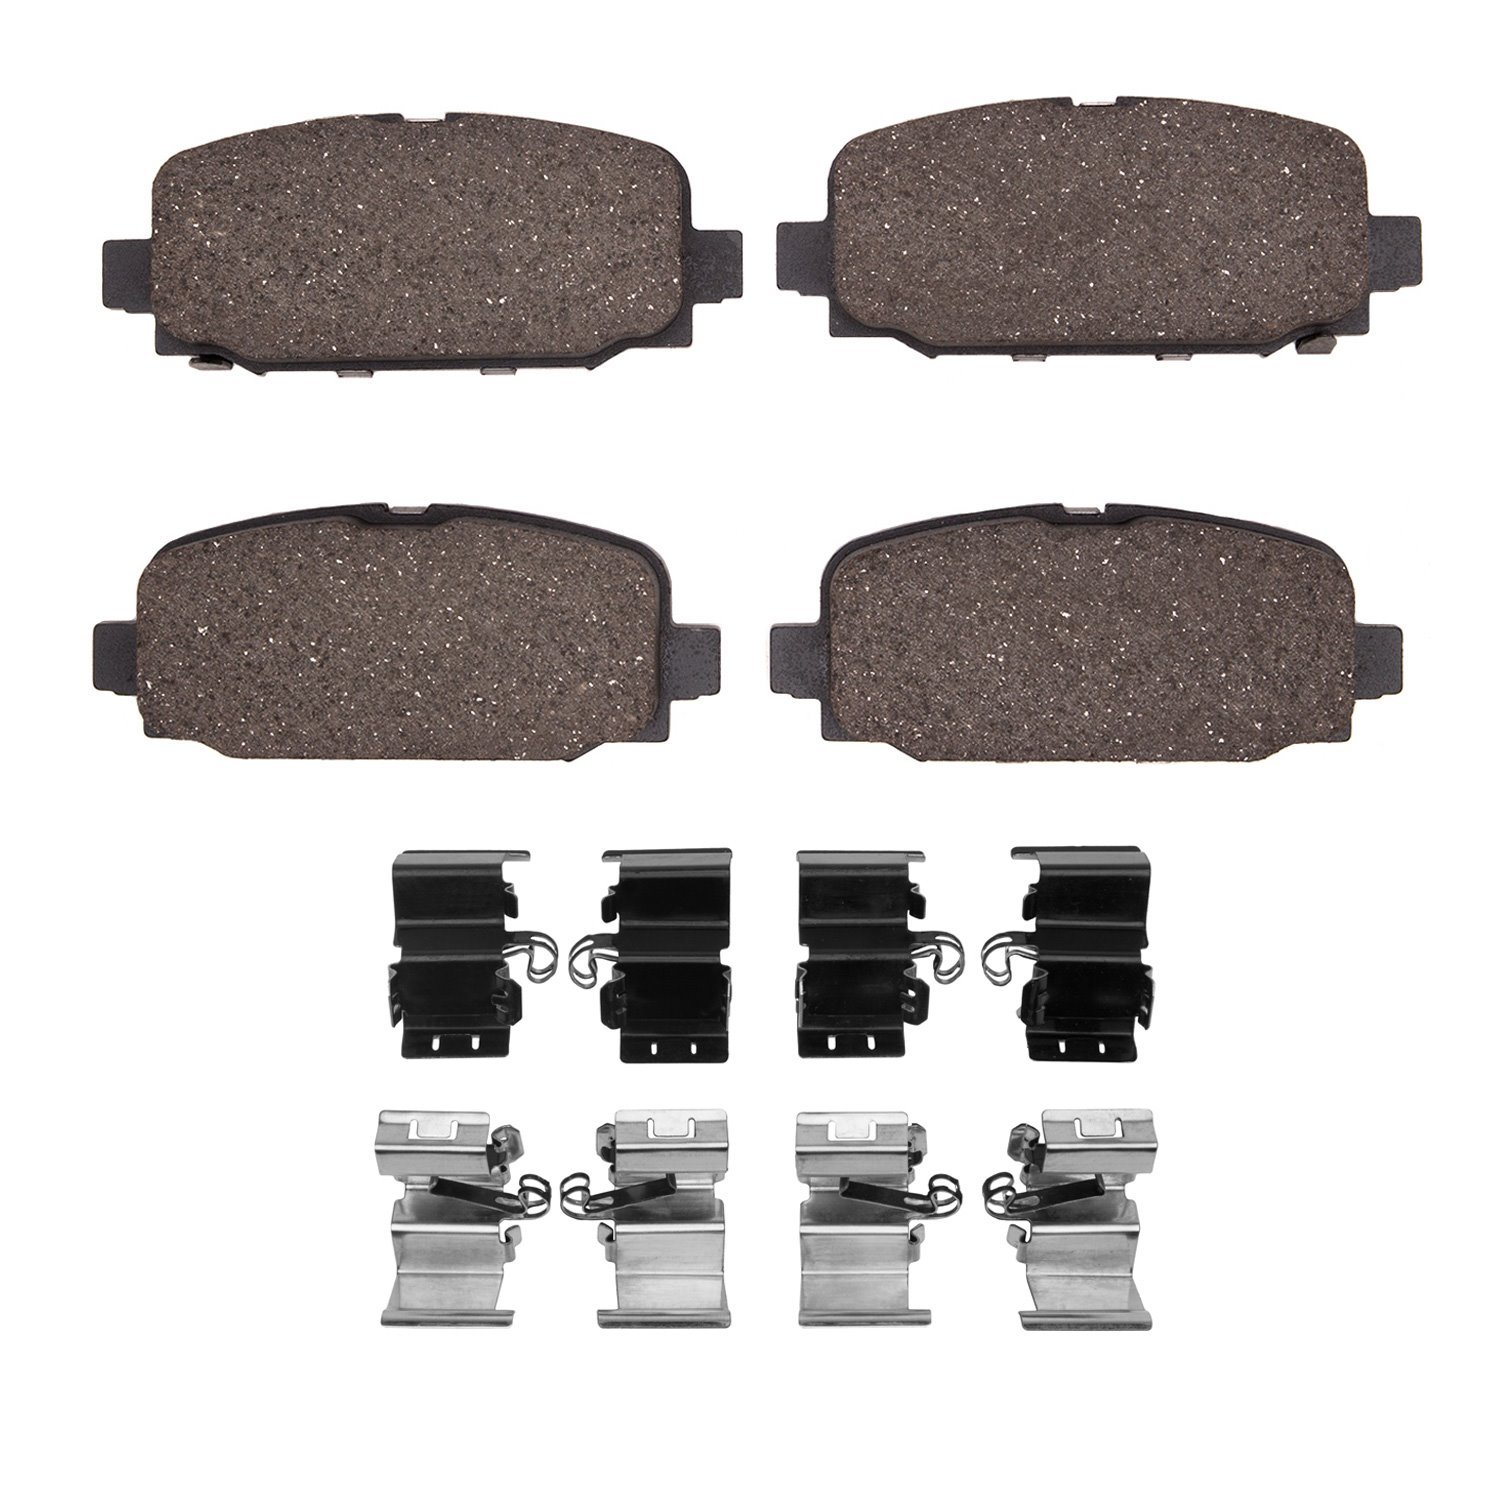 1310-2081-01 3000-Series Ceramic Brake Pads & Hardware Kit, Fits Select Mopar, Position: Rear